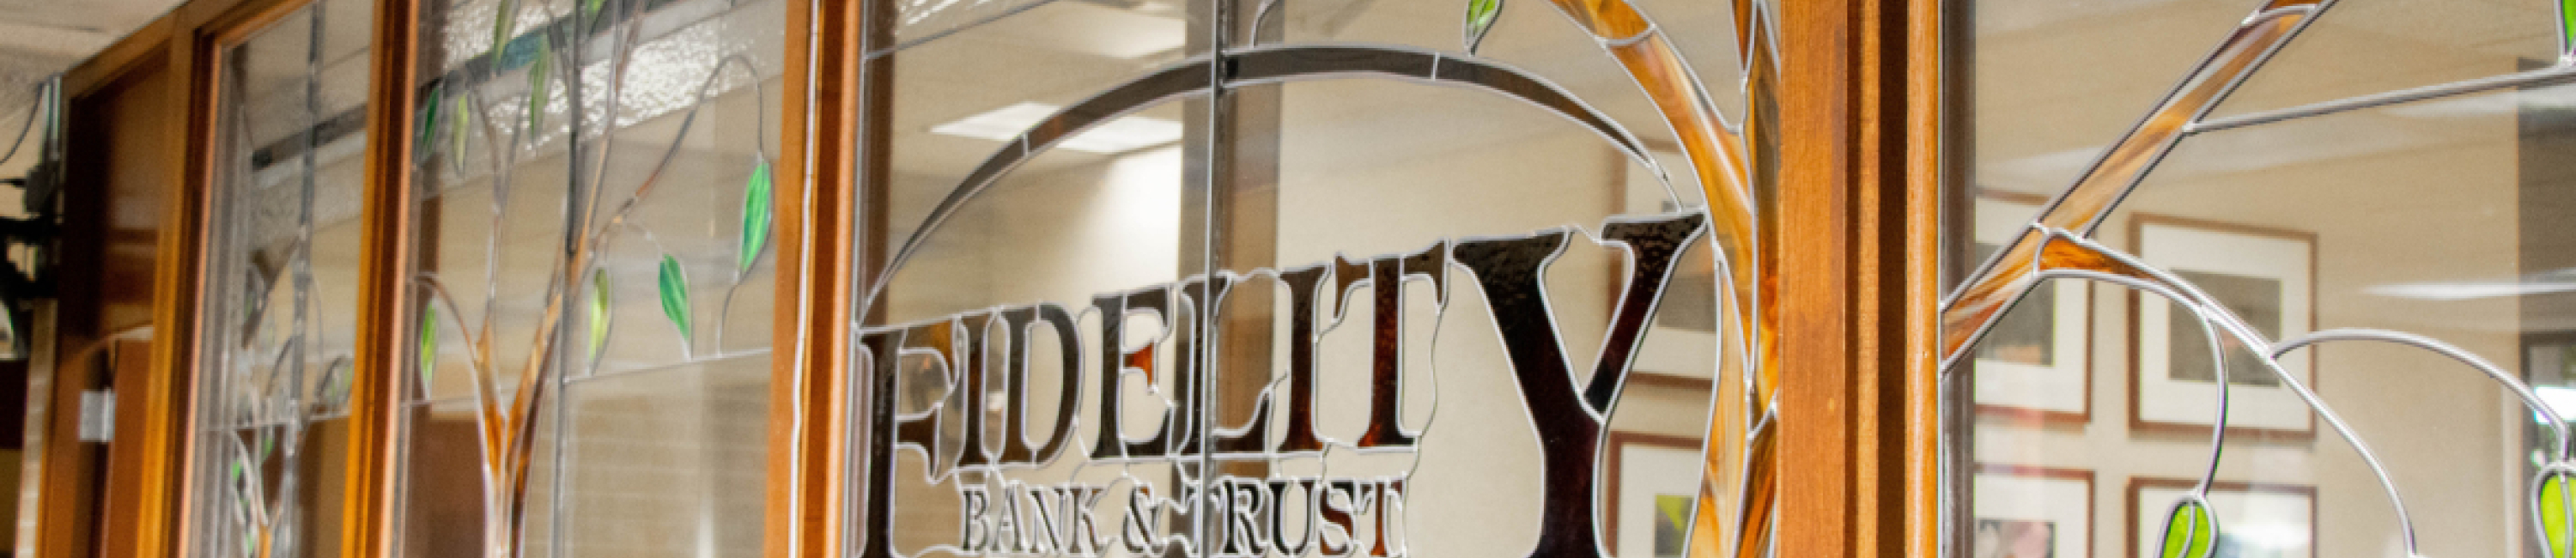 East Dubuque Branch of Fidelity Bank & Trust